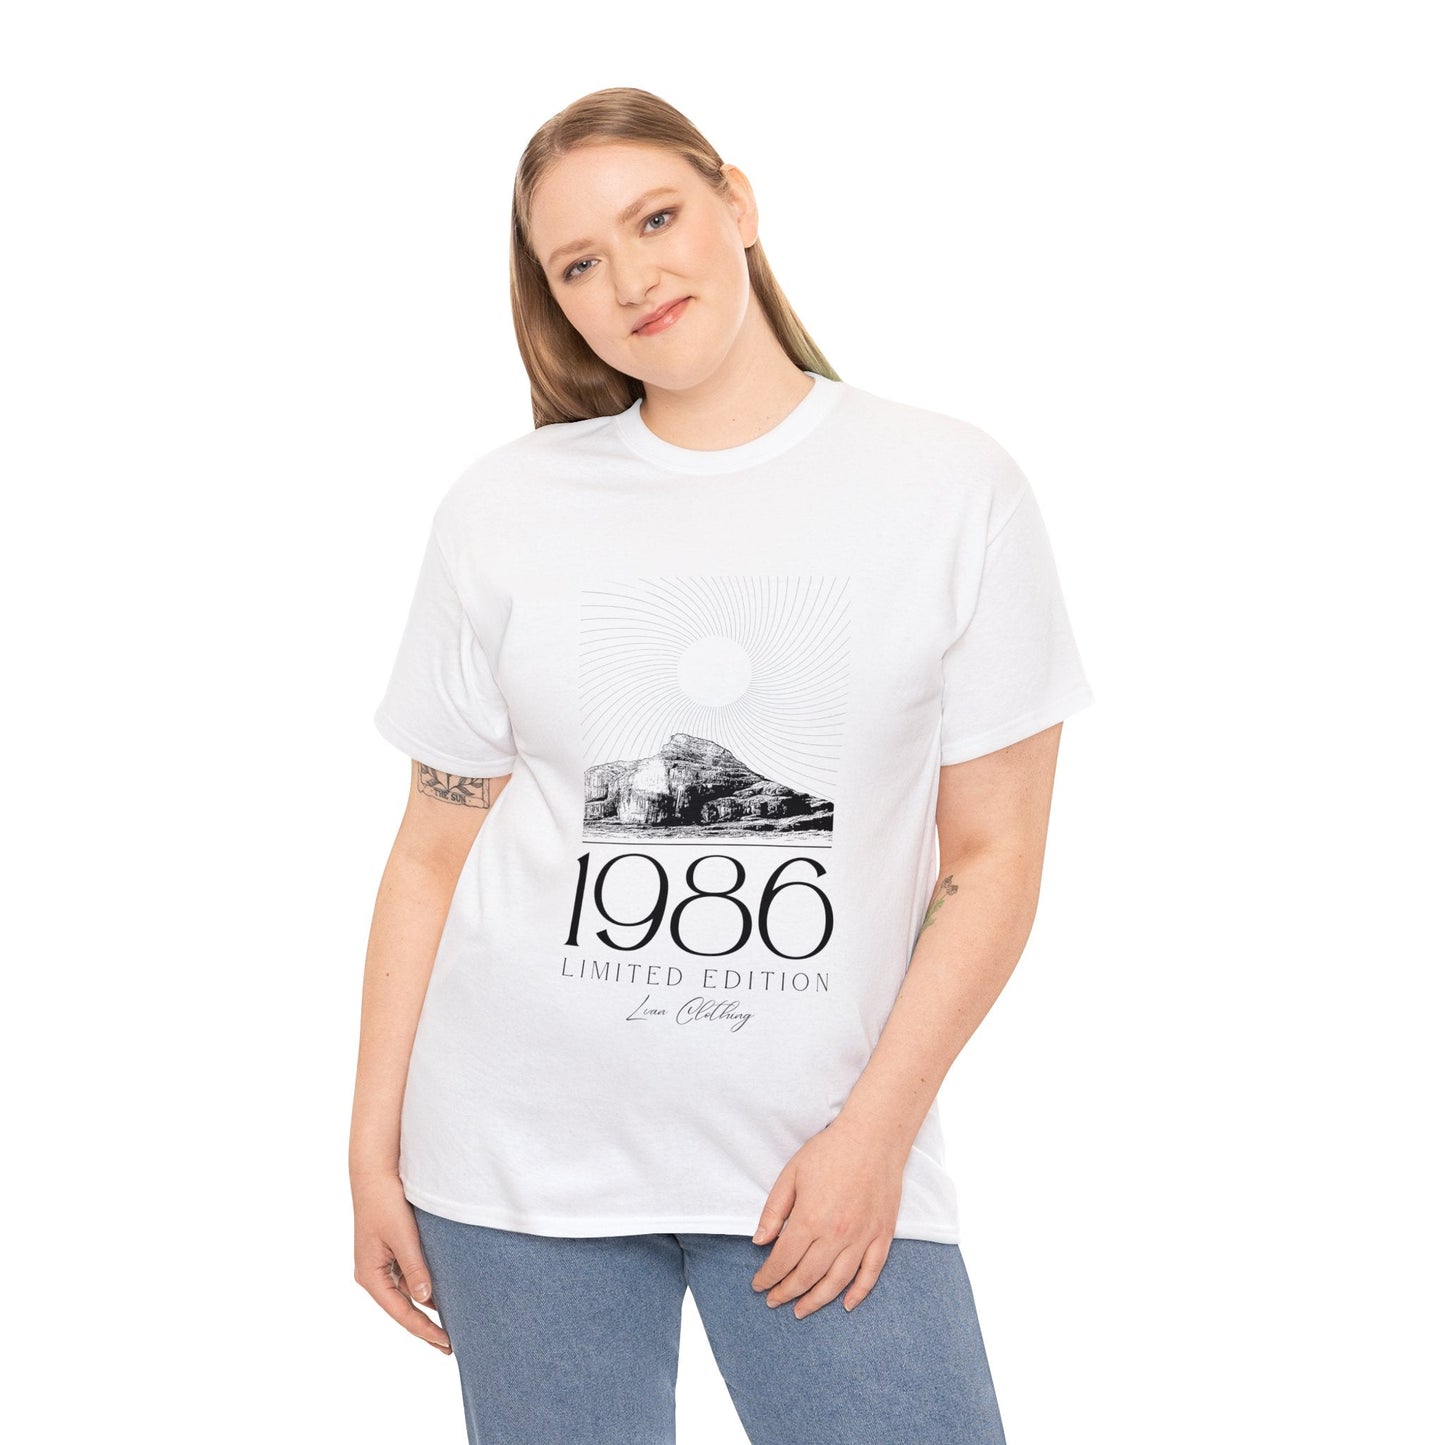 1986 shirt [ PRINT ON YOUR DEMAND AVALIABLE]